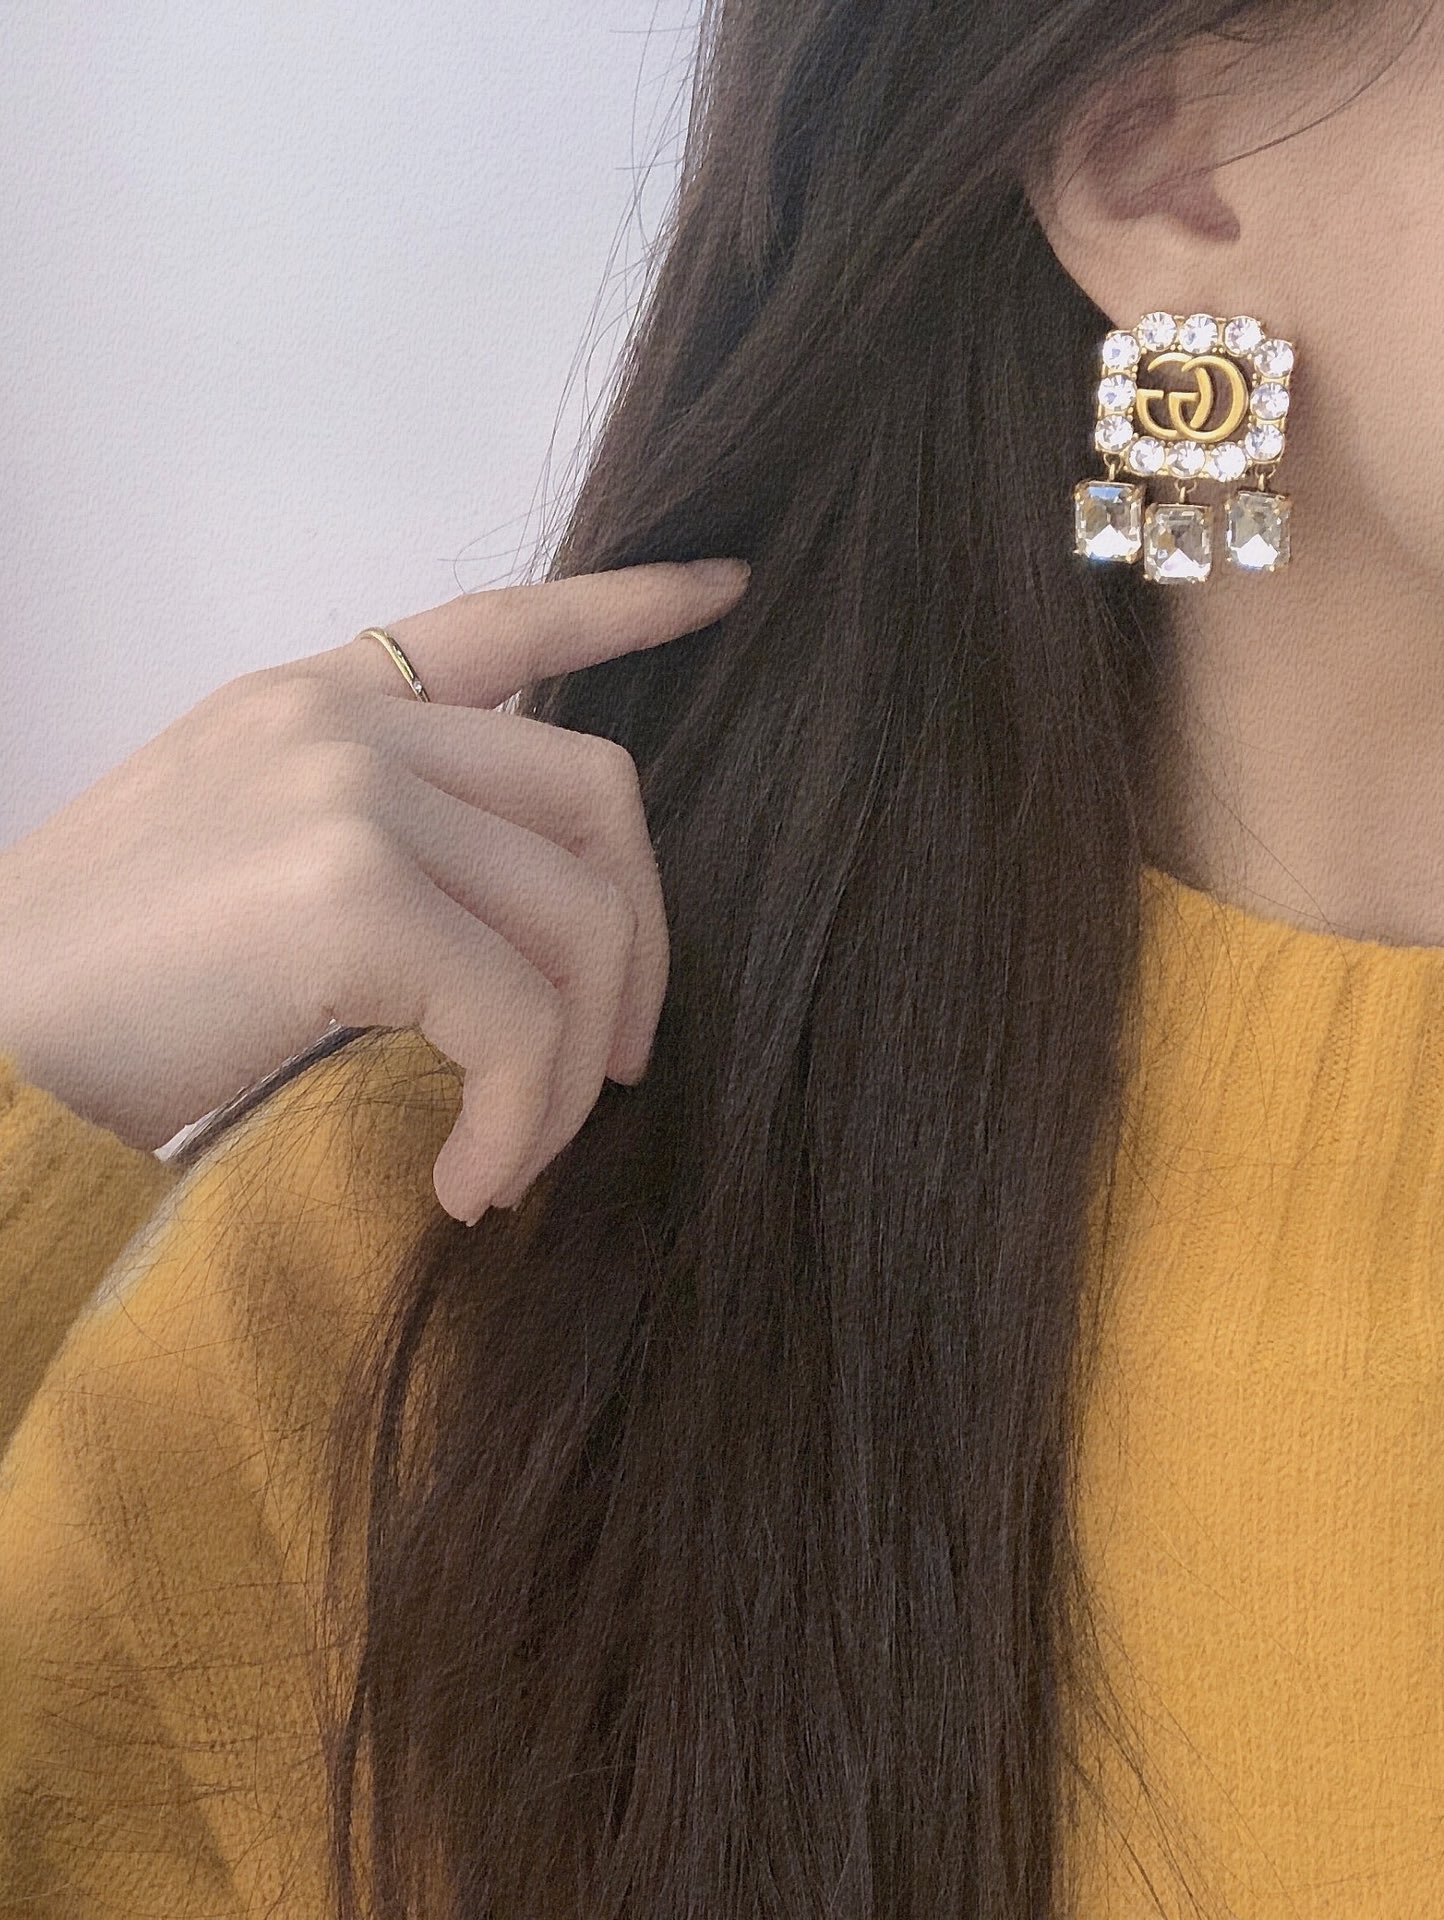 A389 Gucci earrings